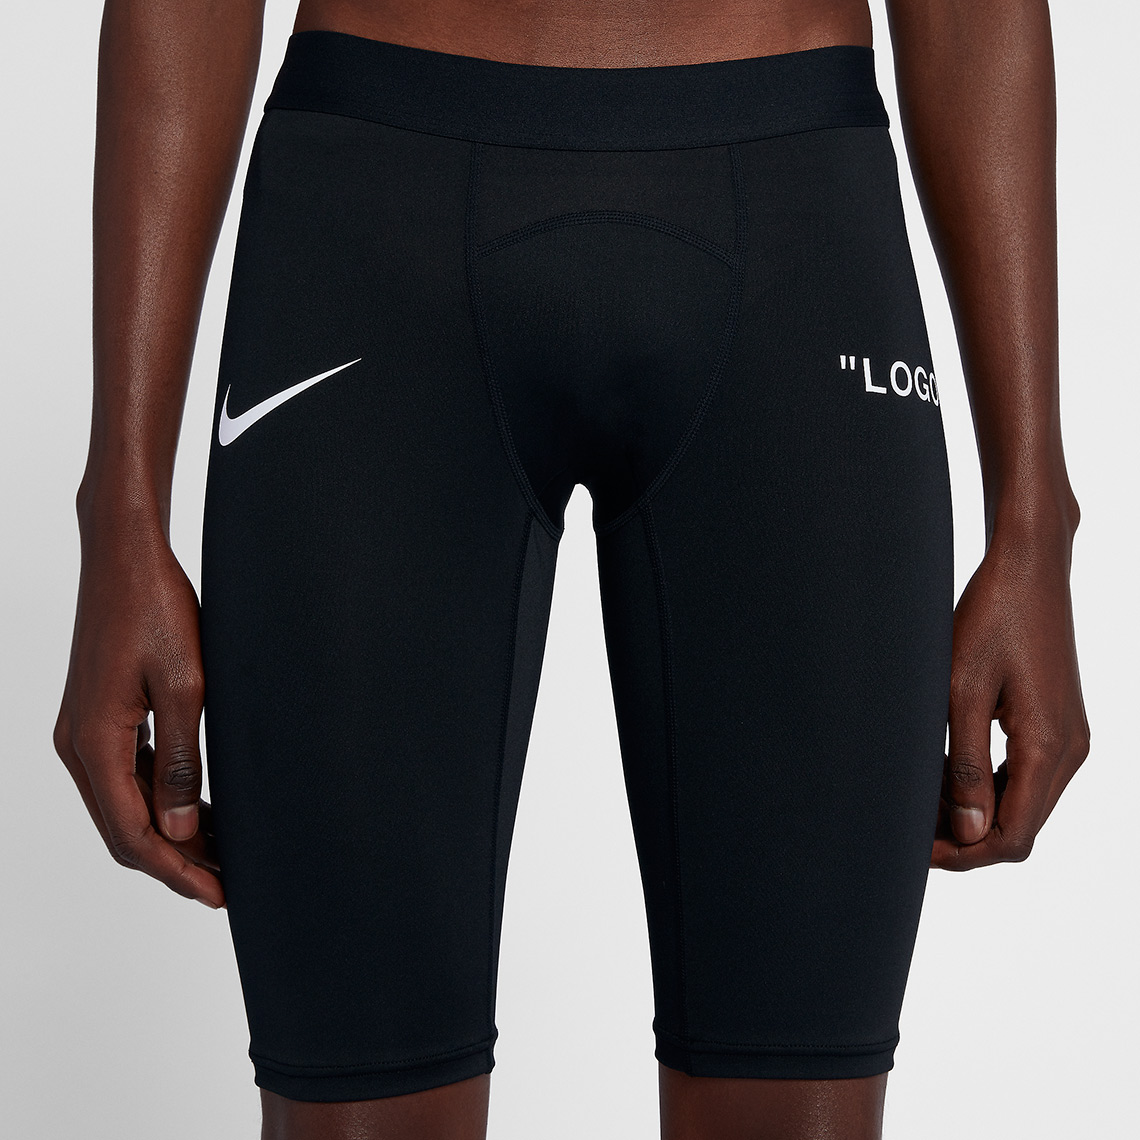 Off White Nike Soccer Shorts Black Ah0376 010 2